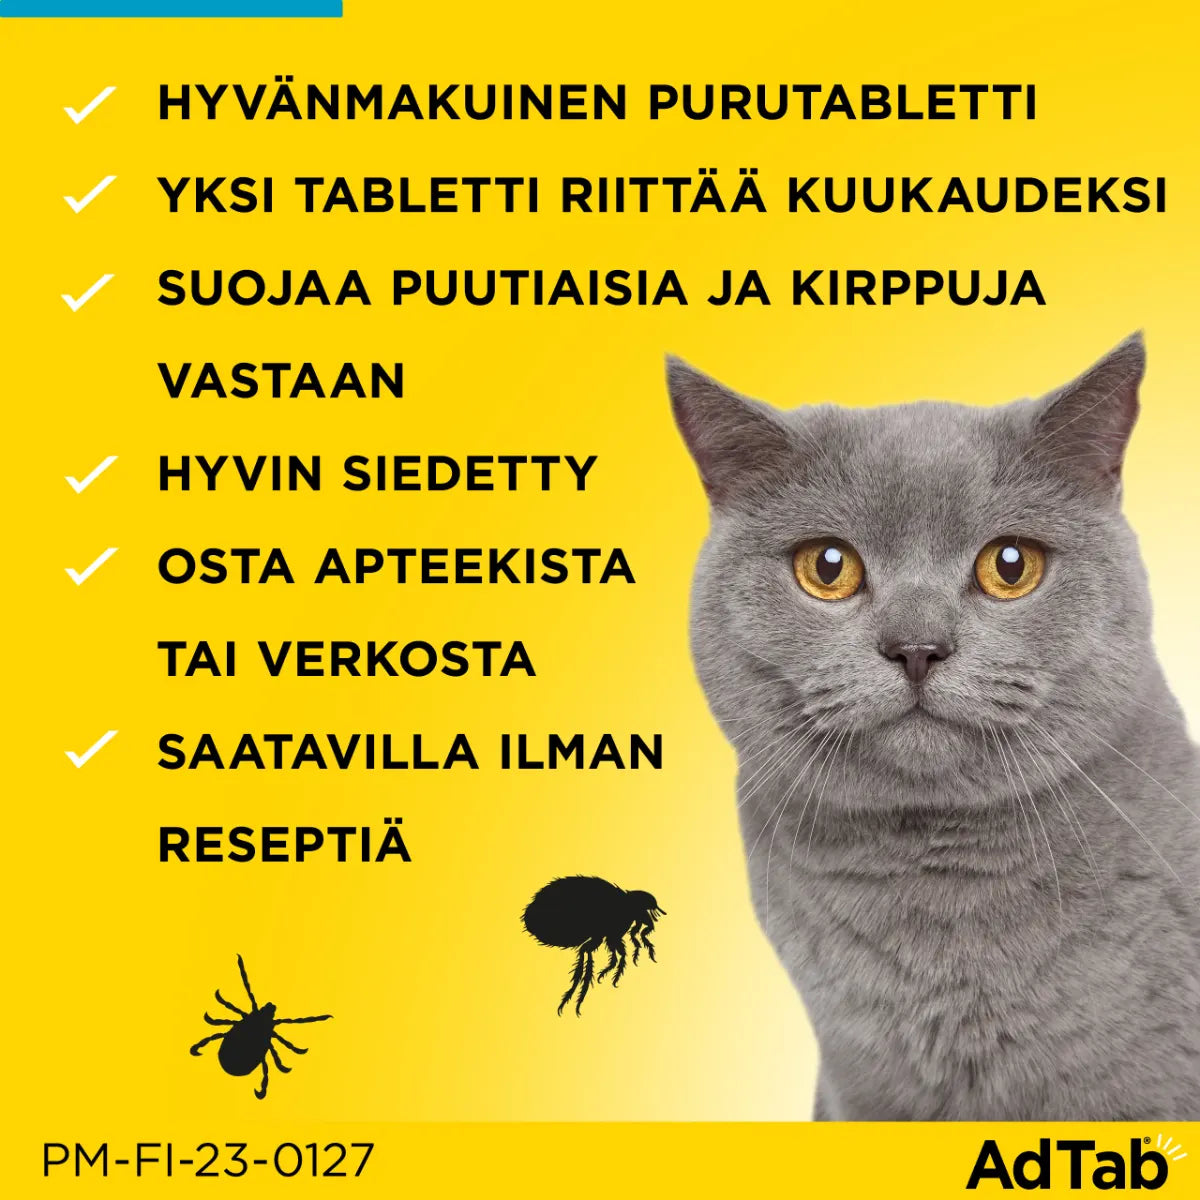 ADTAB 12 mg Vet purutabletti kissoille 0,5-2 kg 3 kpl saatavilla ilman reseptiä